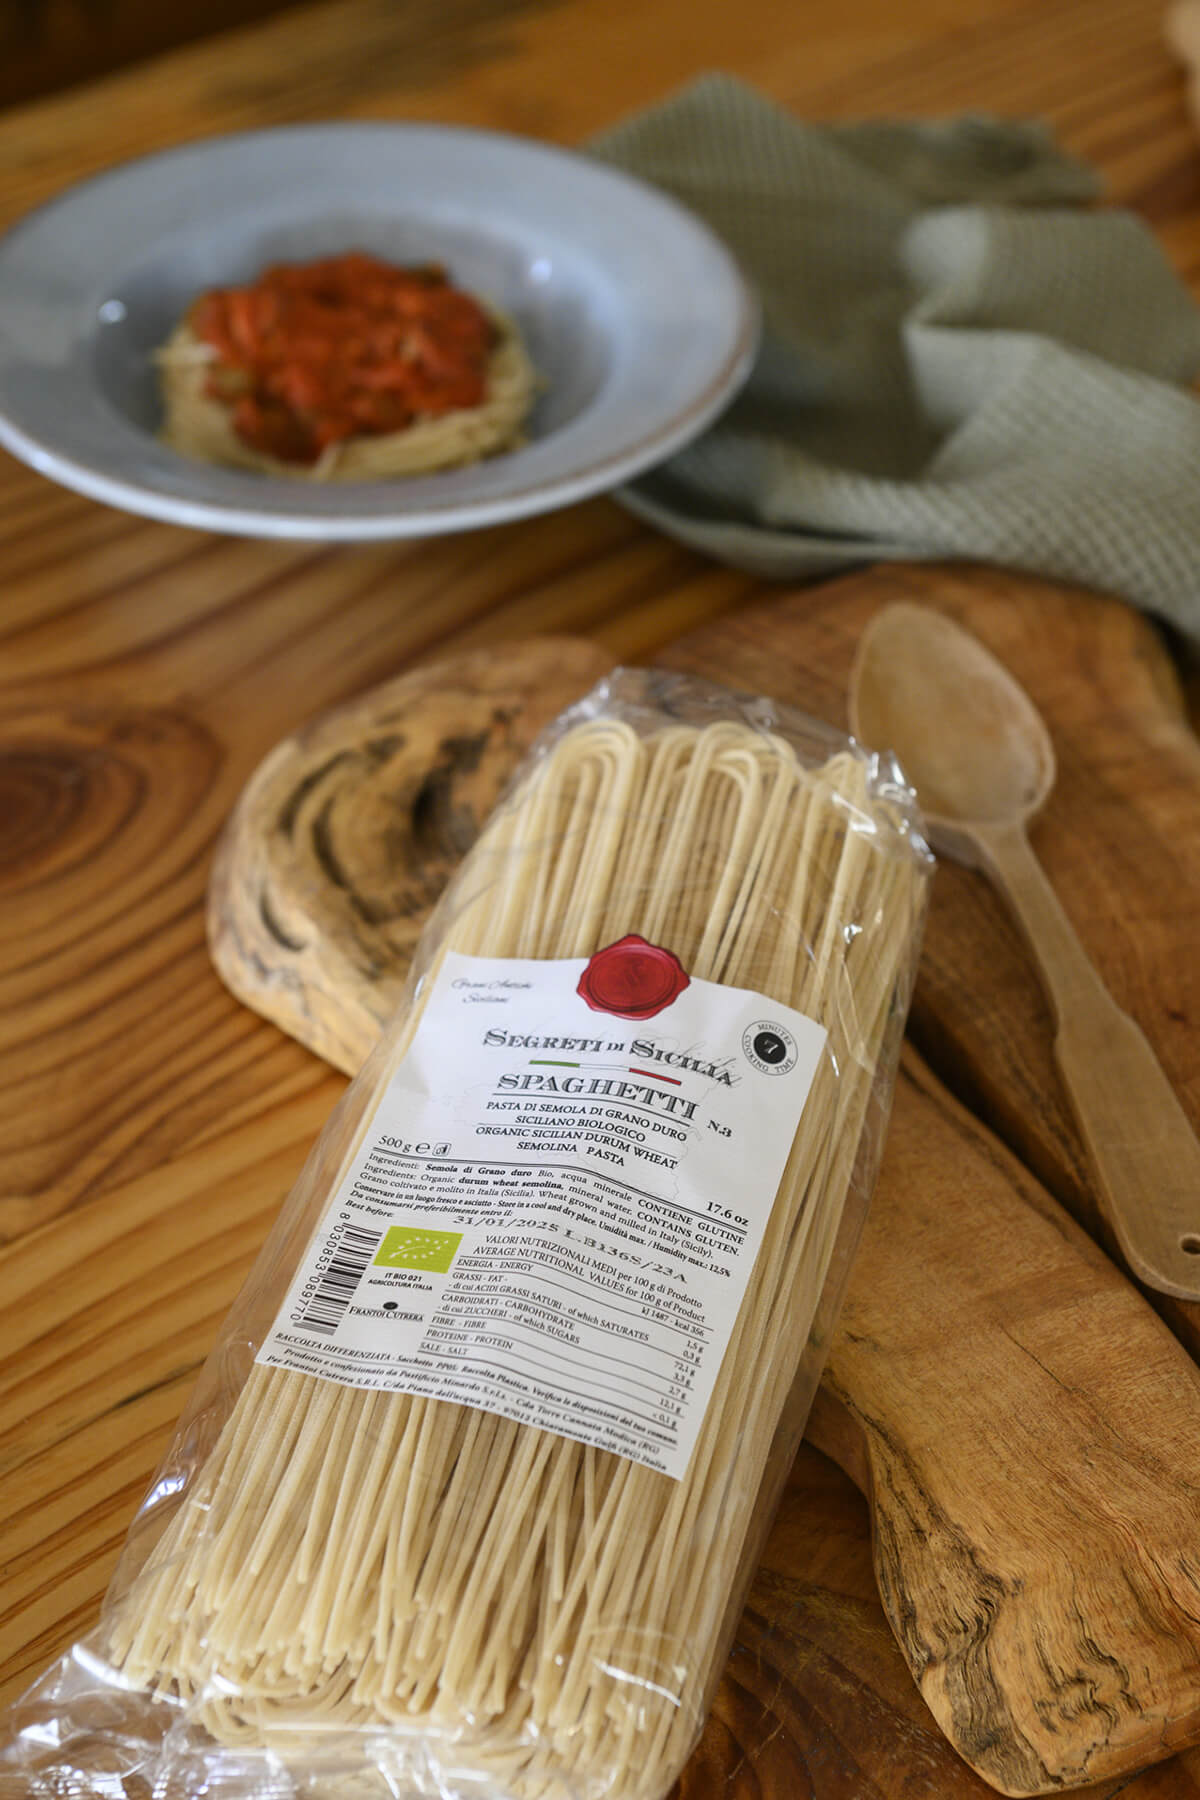 Spaghetti n.3 organic artisan pasta – Secrets of Sicily